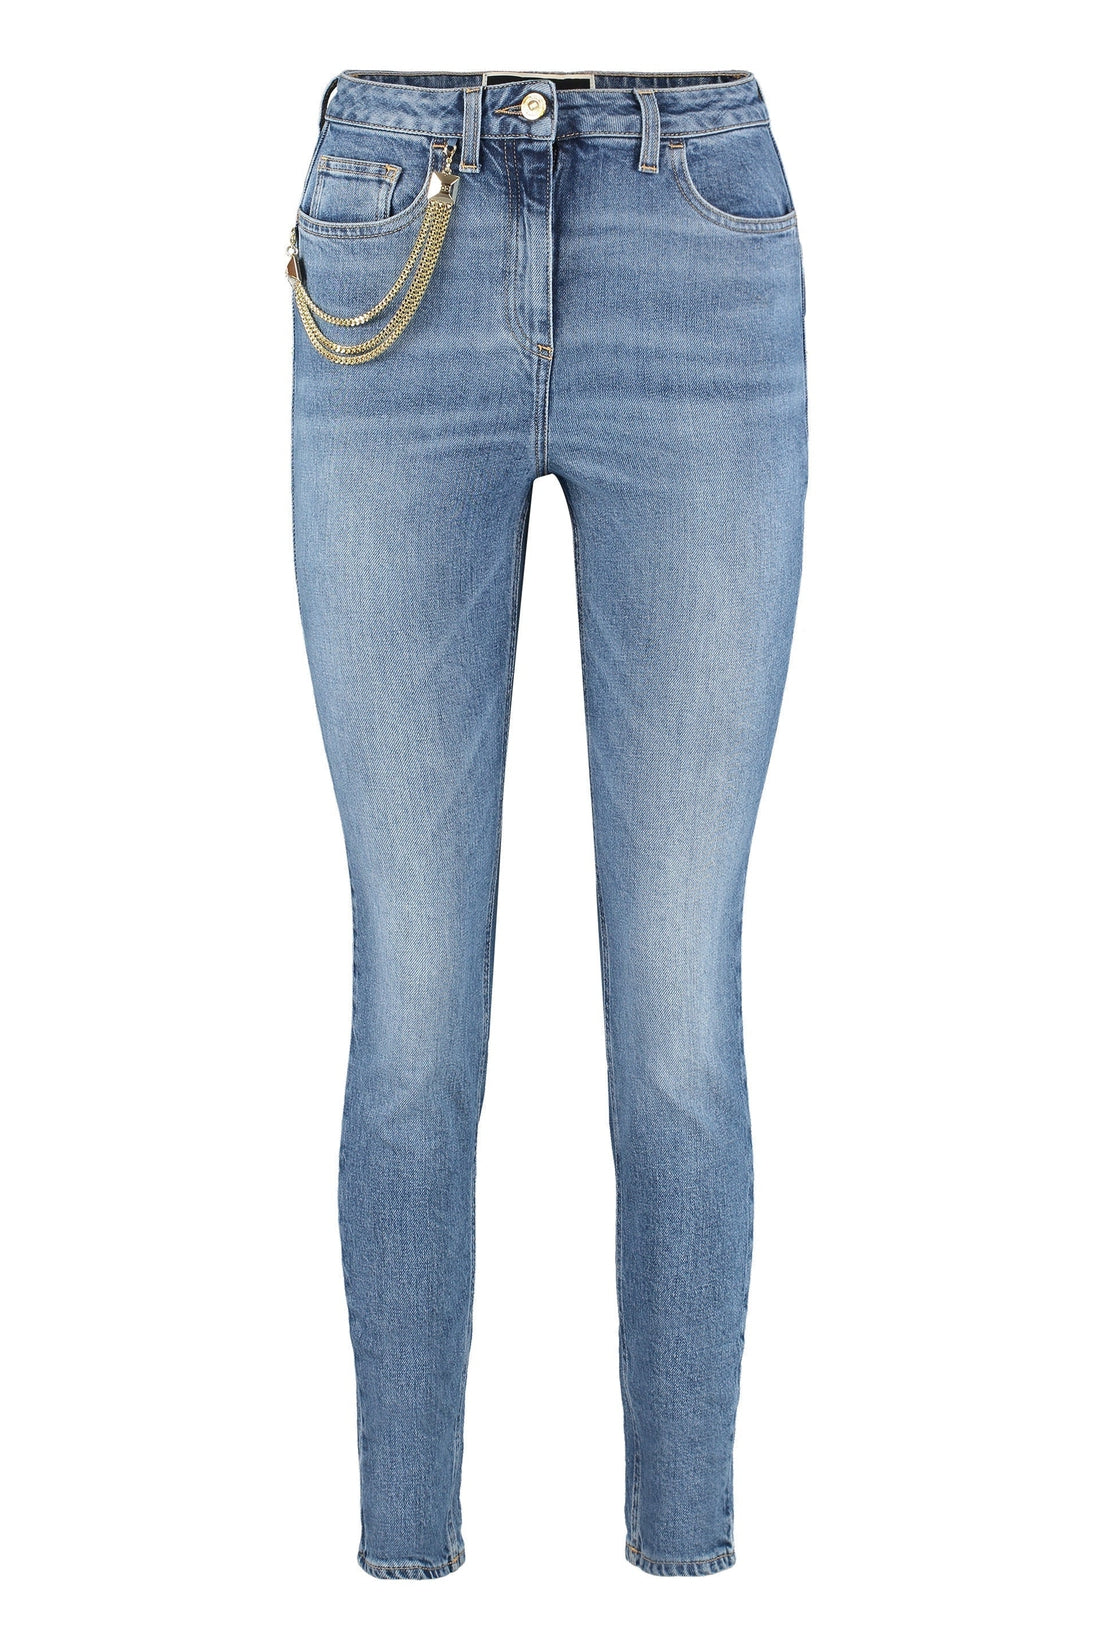 Elisabetta Franchi-OUTLET-SALE-Super skinny fit jeans-ARCHIVIST